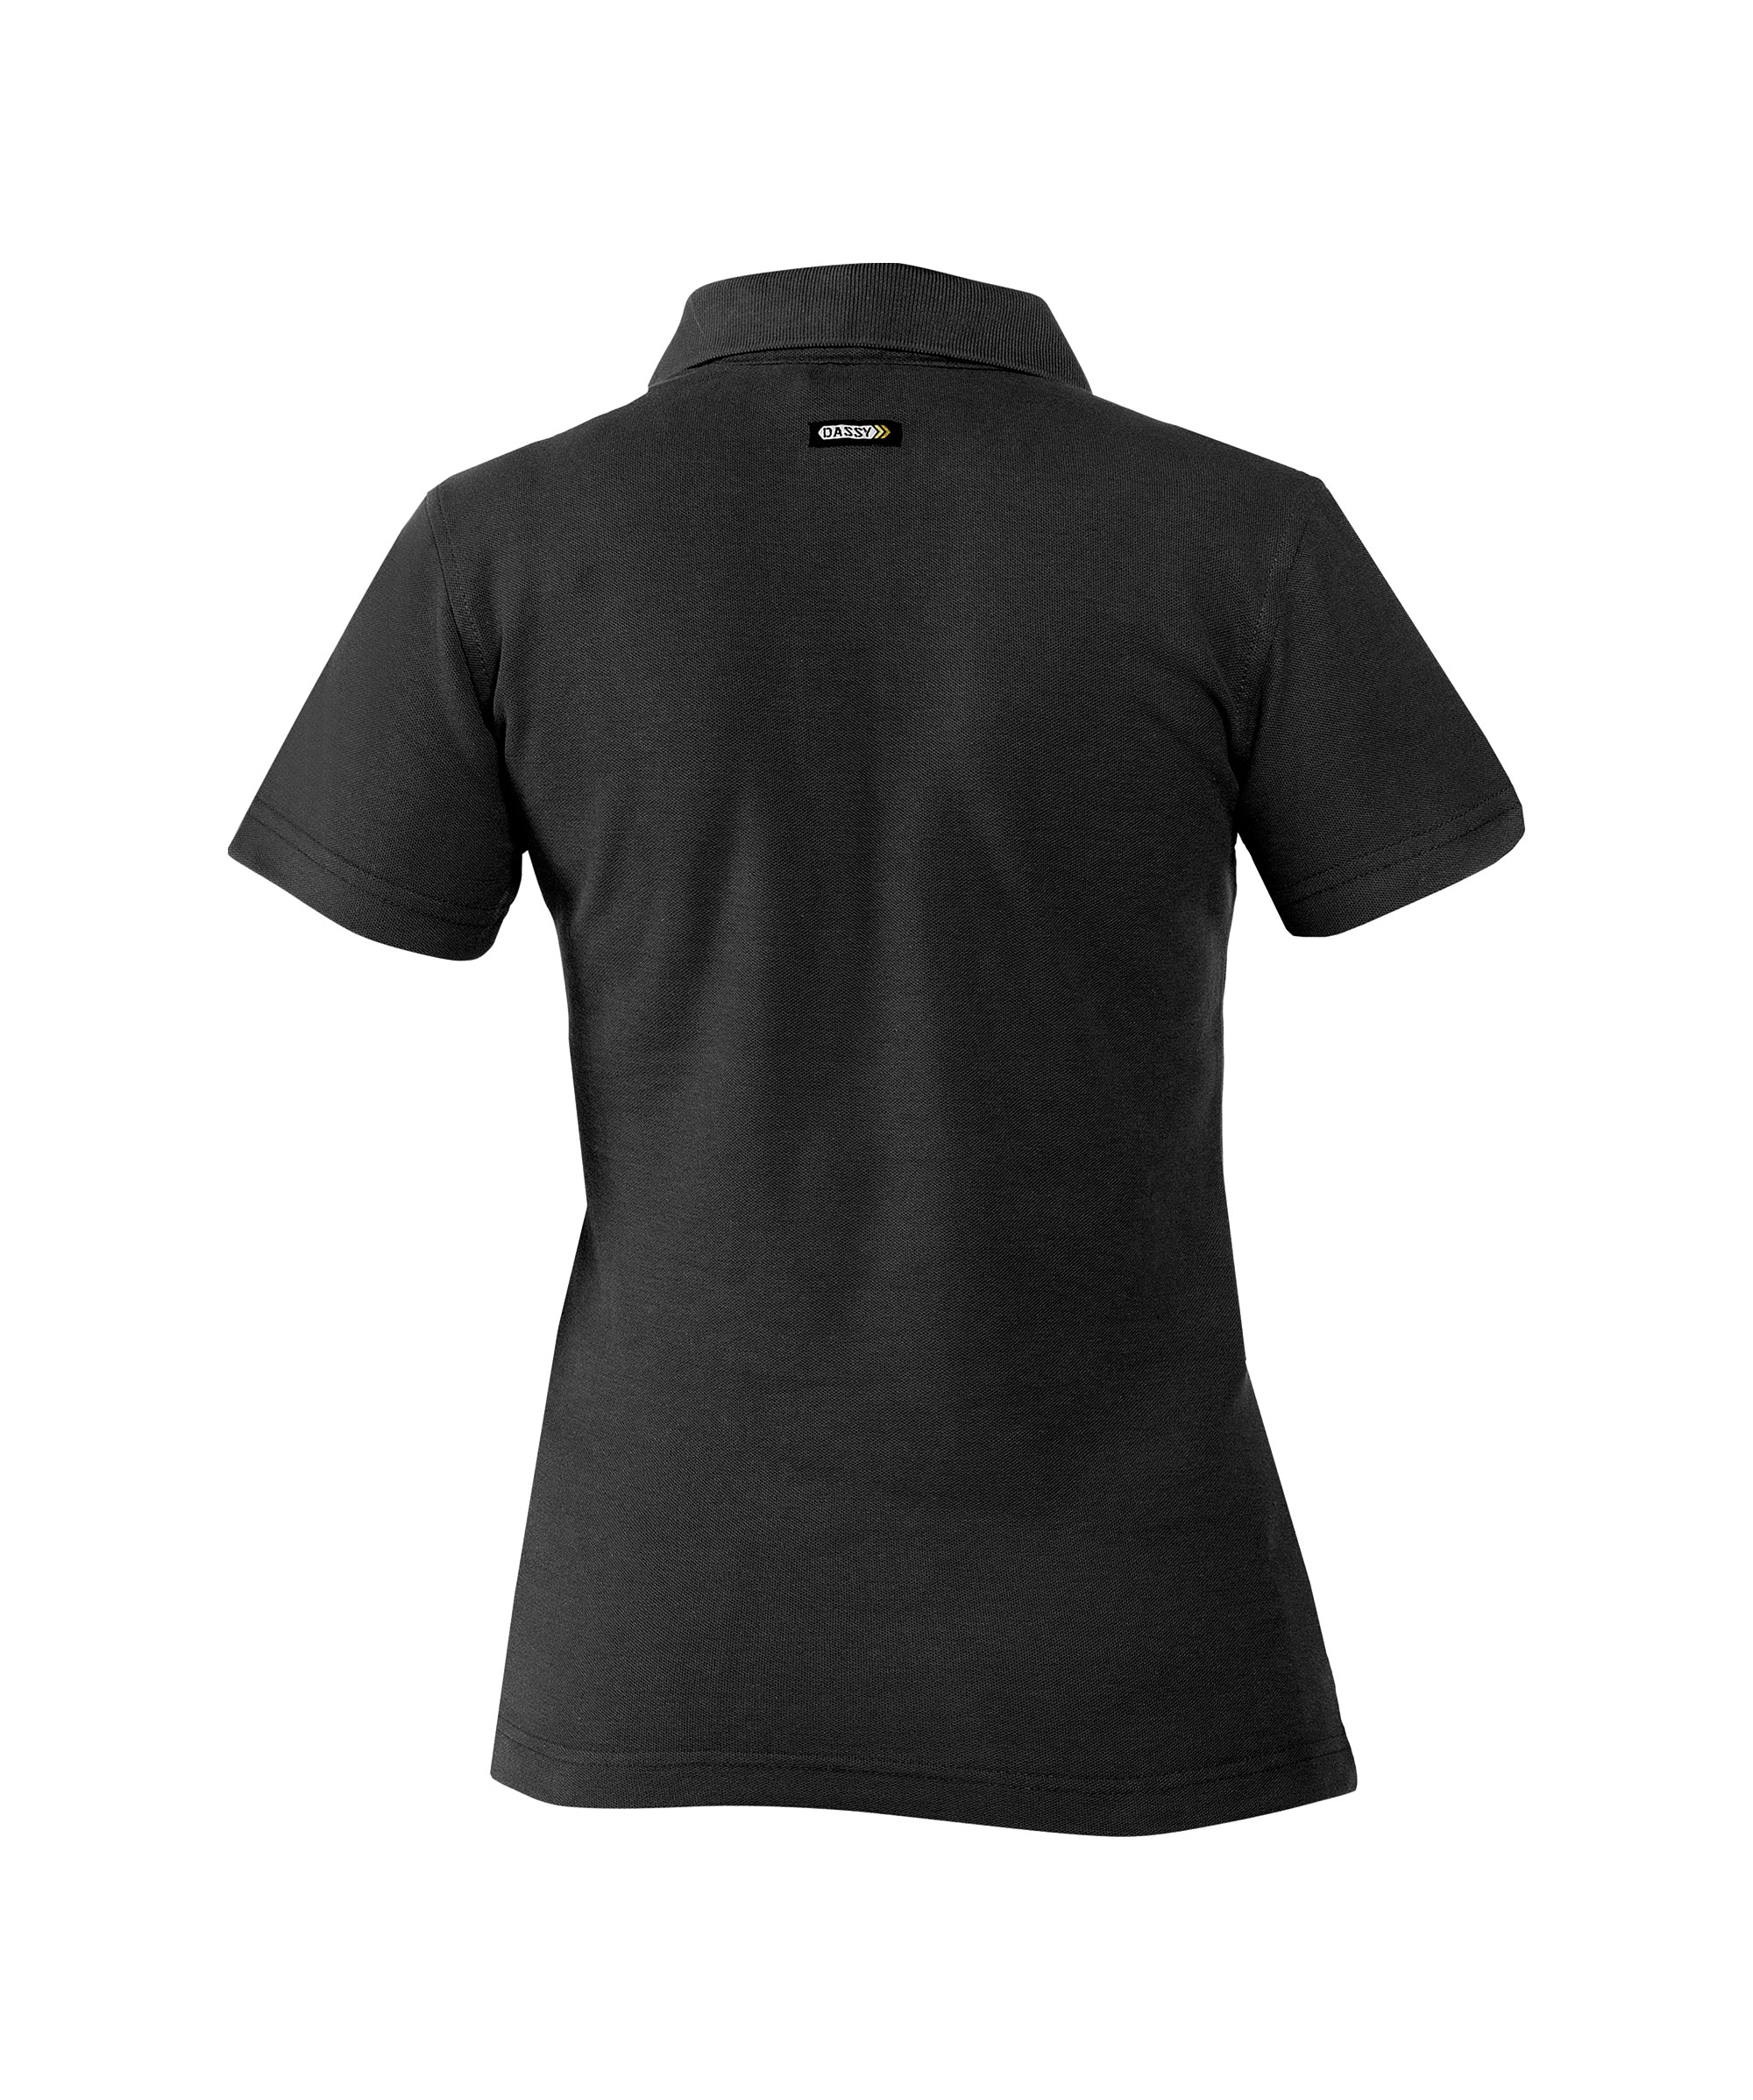 leon-women_polo-shirt_black_back.jpg